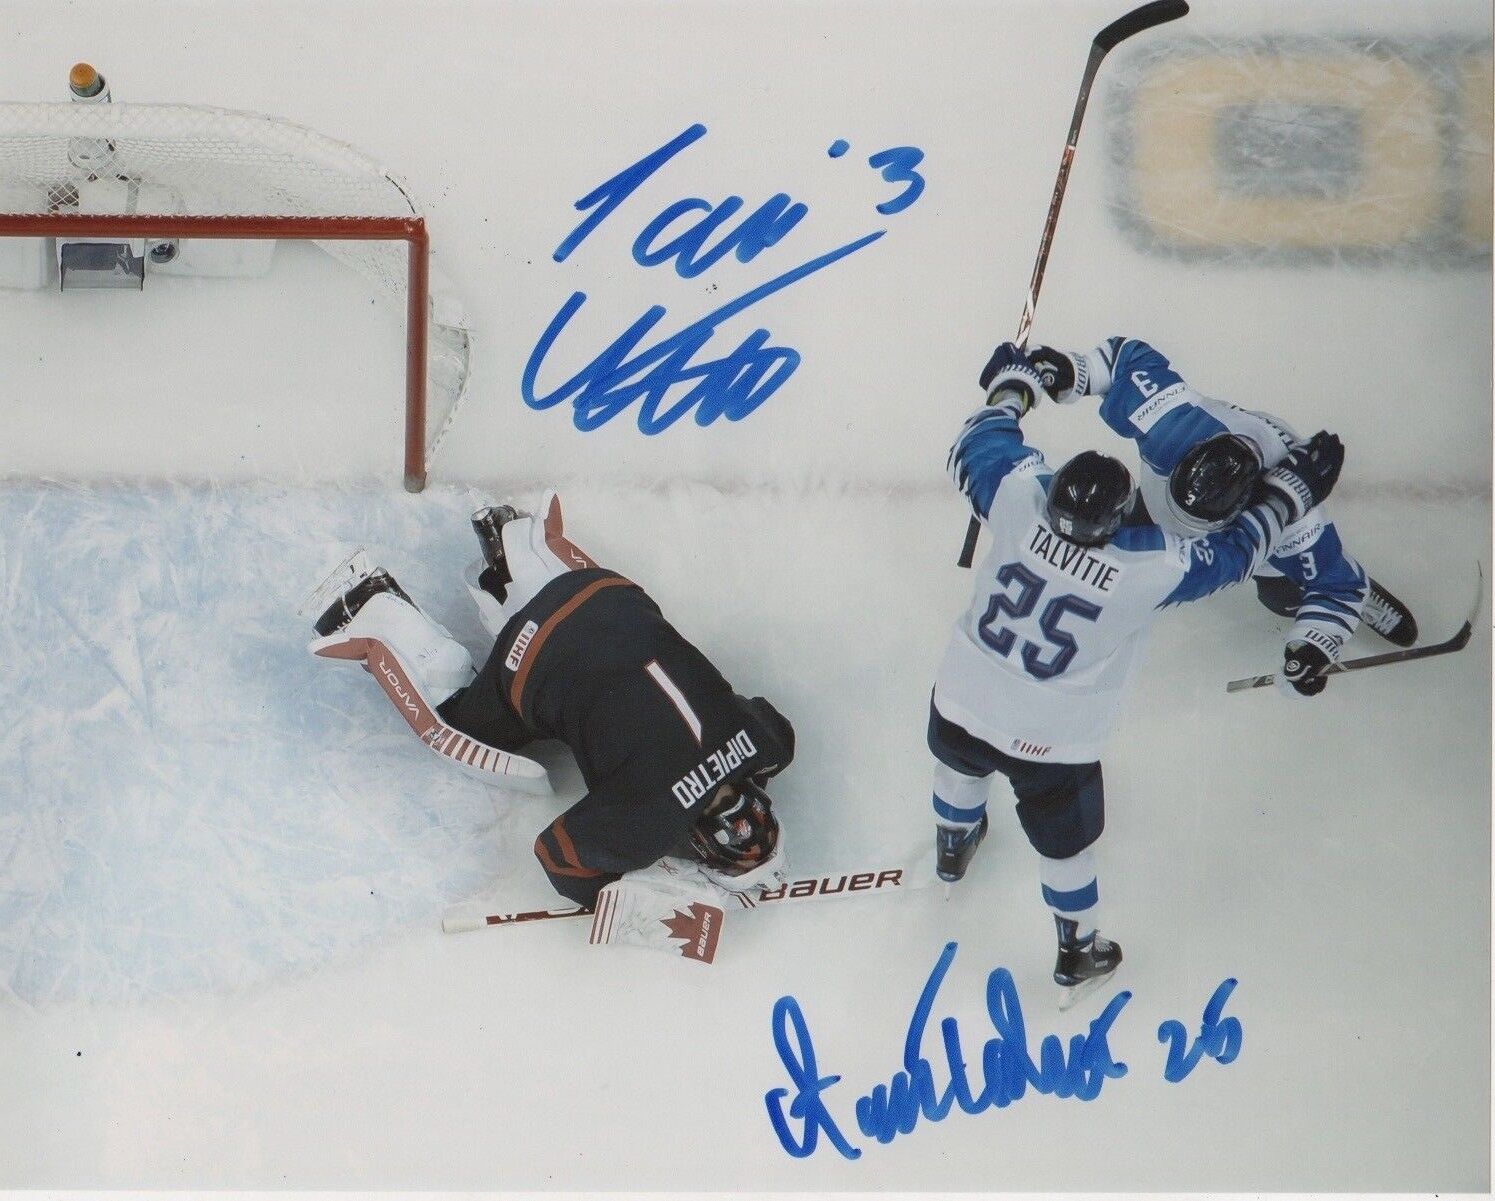 Finland Toni Utunen Aarne Talvitie Signed Autographed 8x10 IIHF Photo Poster painting COA #1